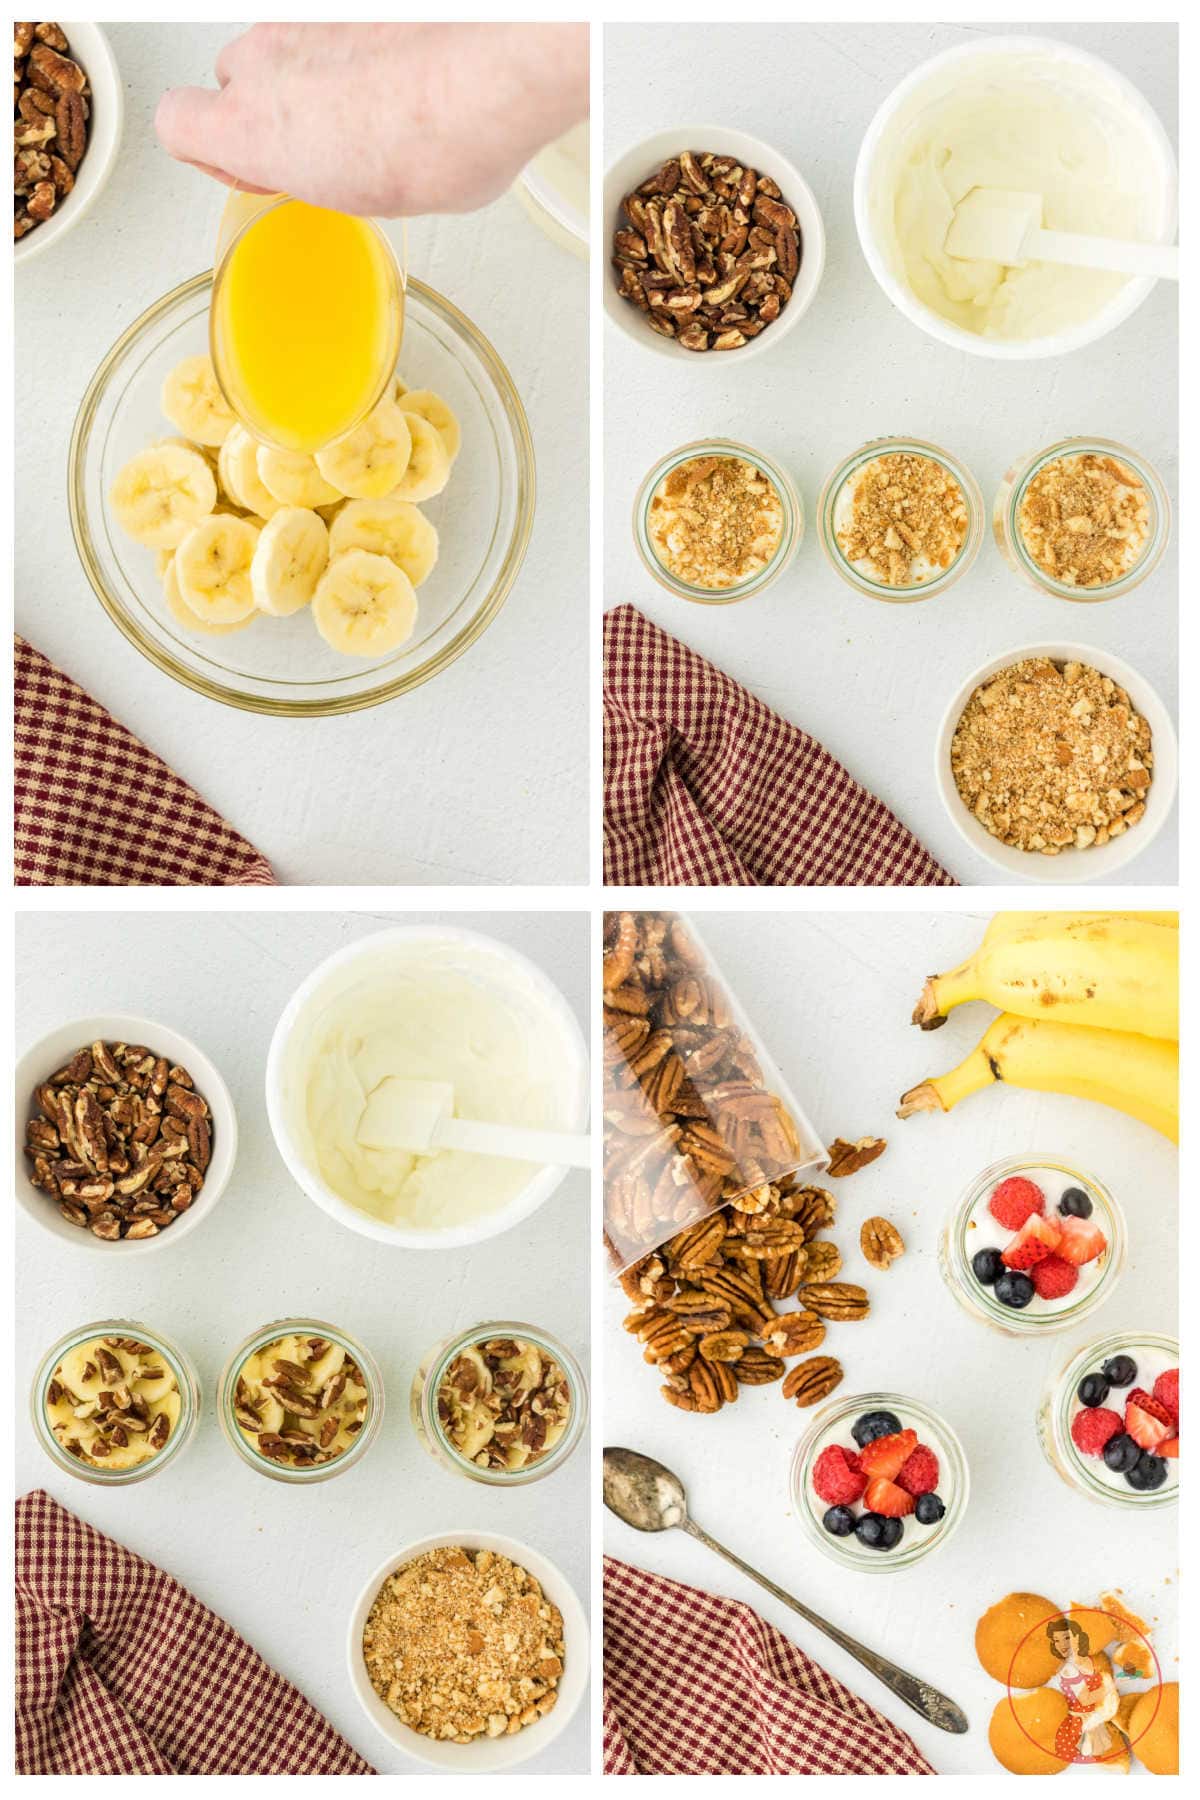 Step by step images showing how to make banana yogurt parfaits.